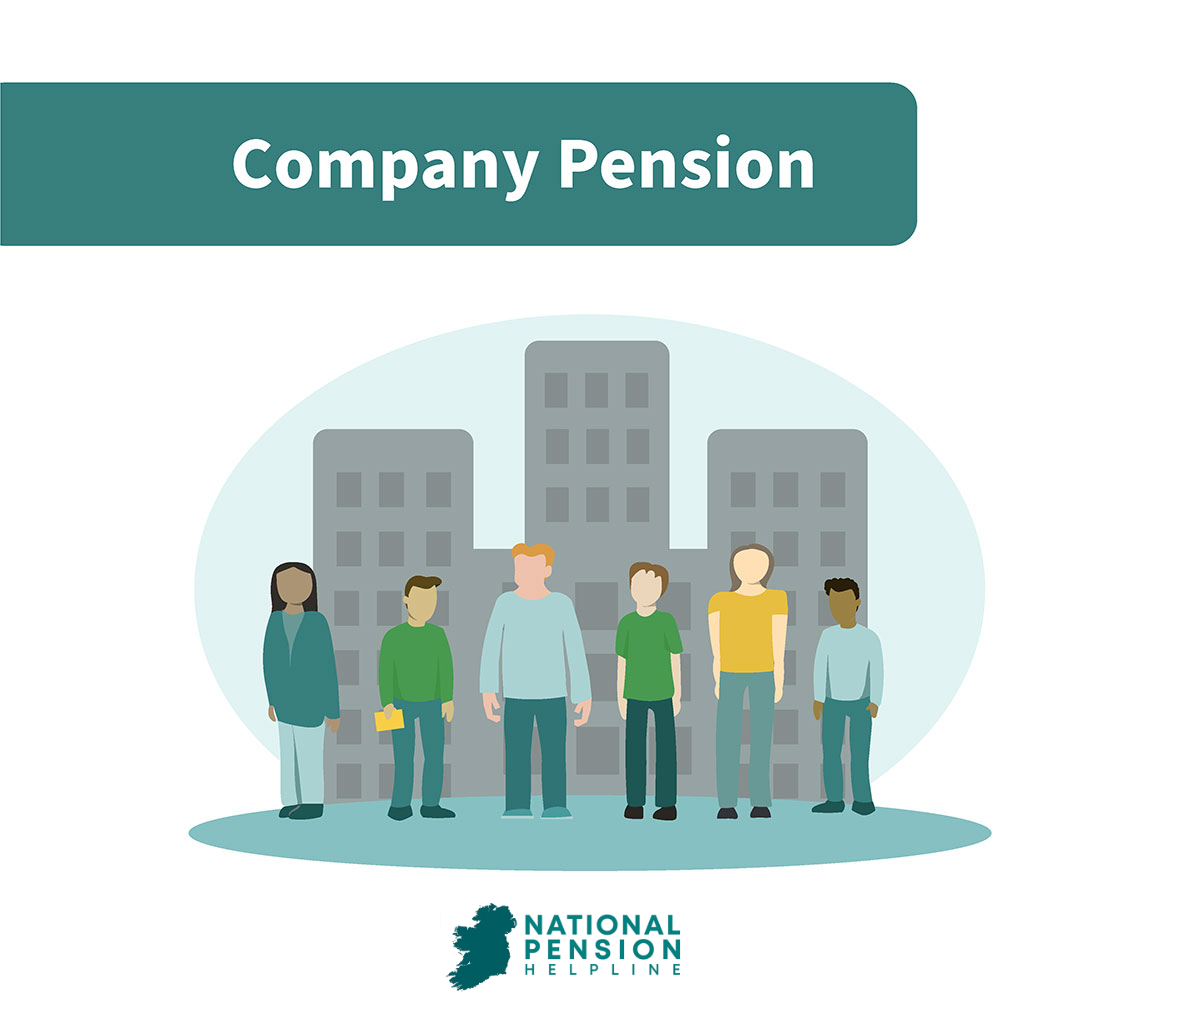 Company Pensions